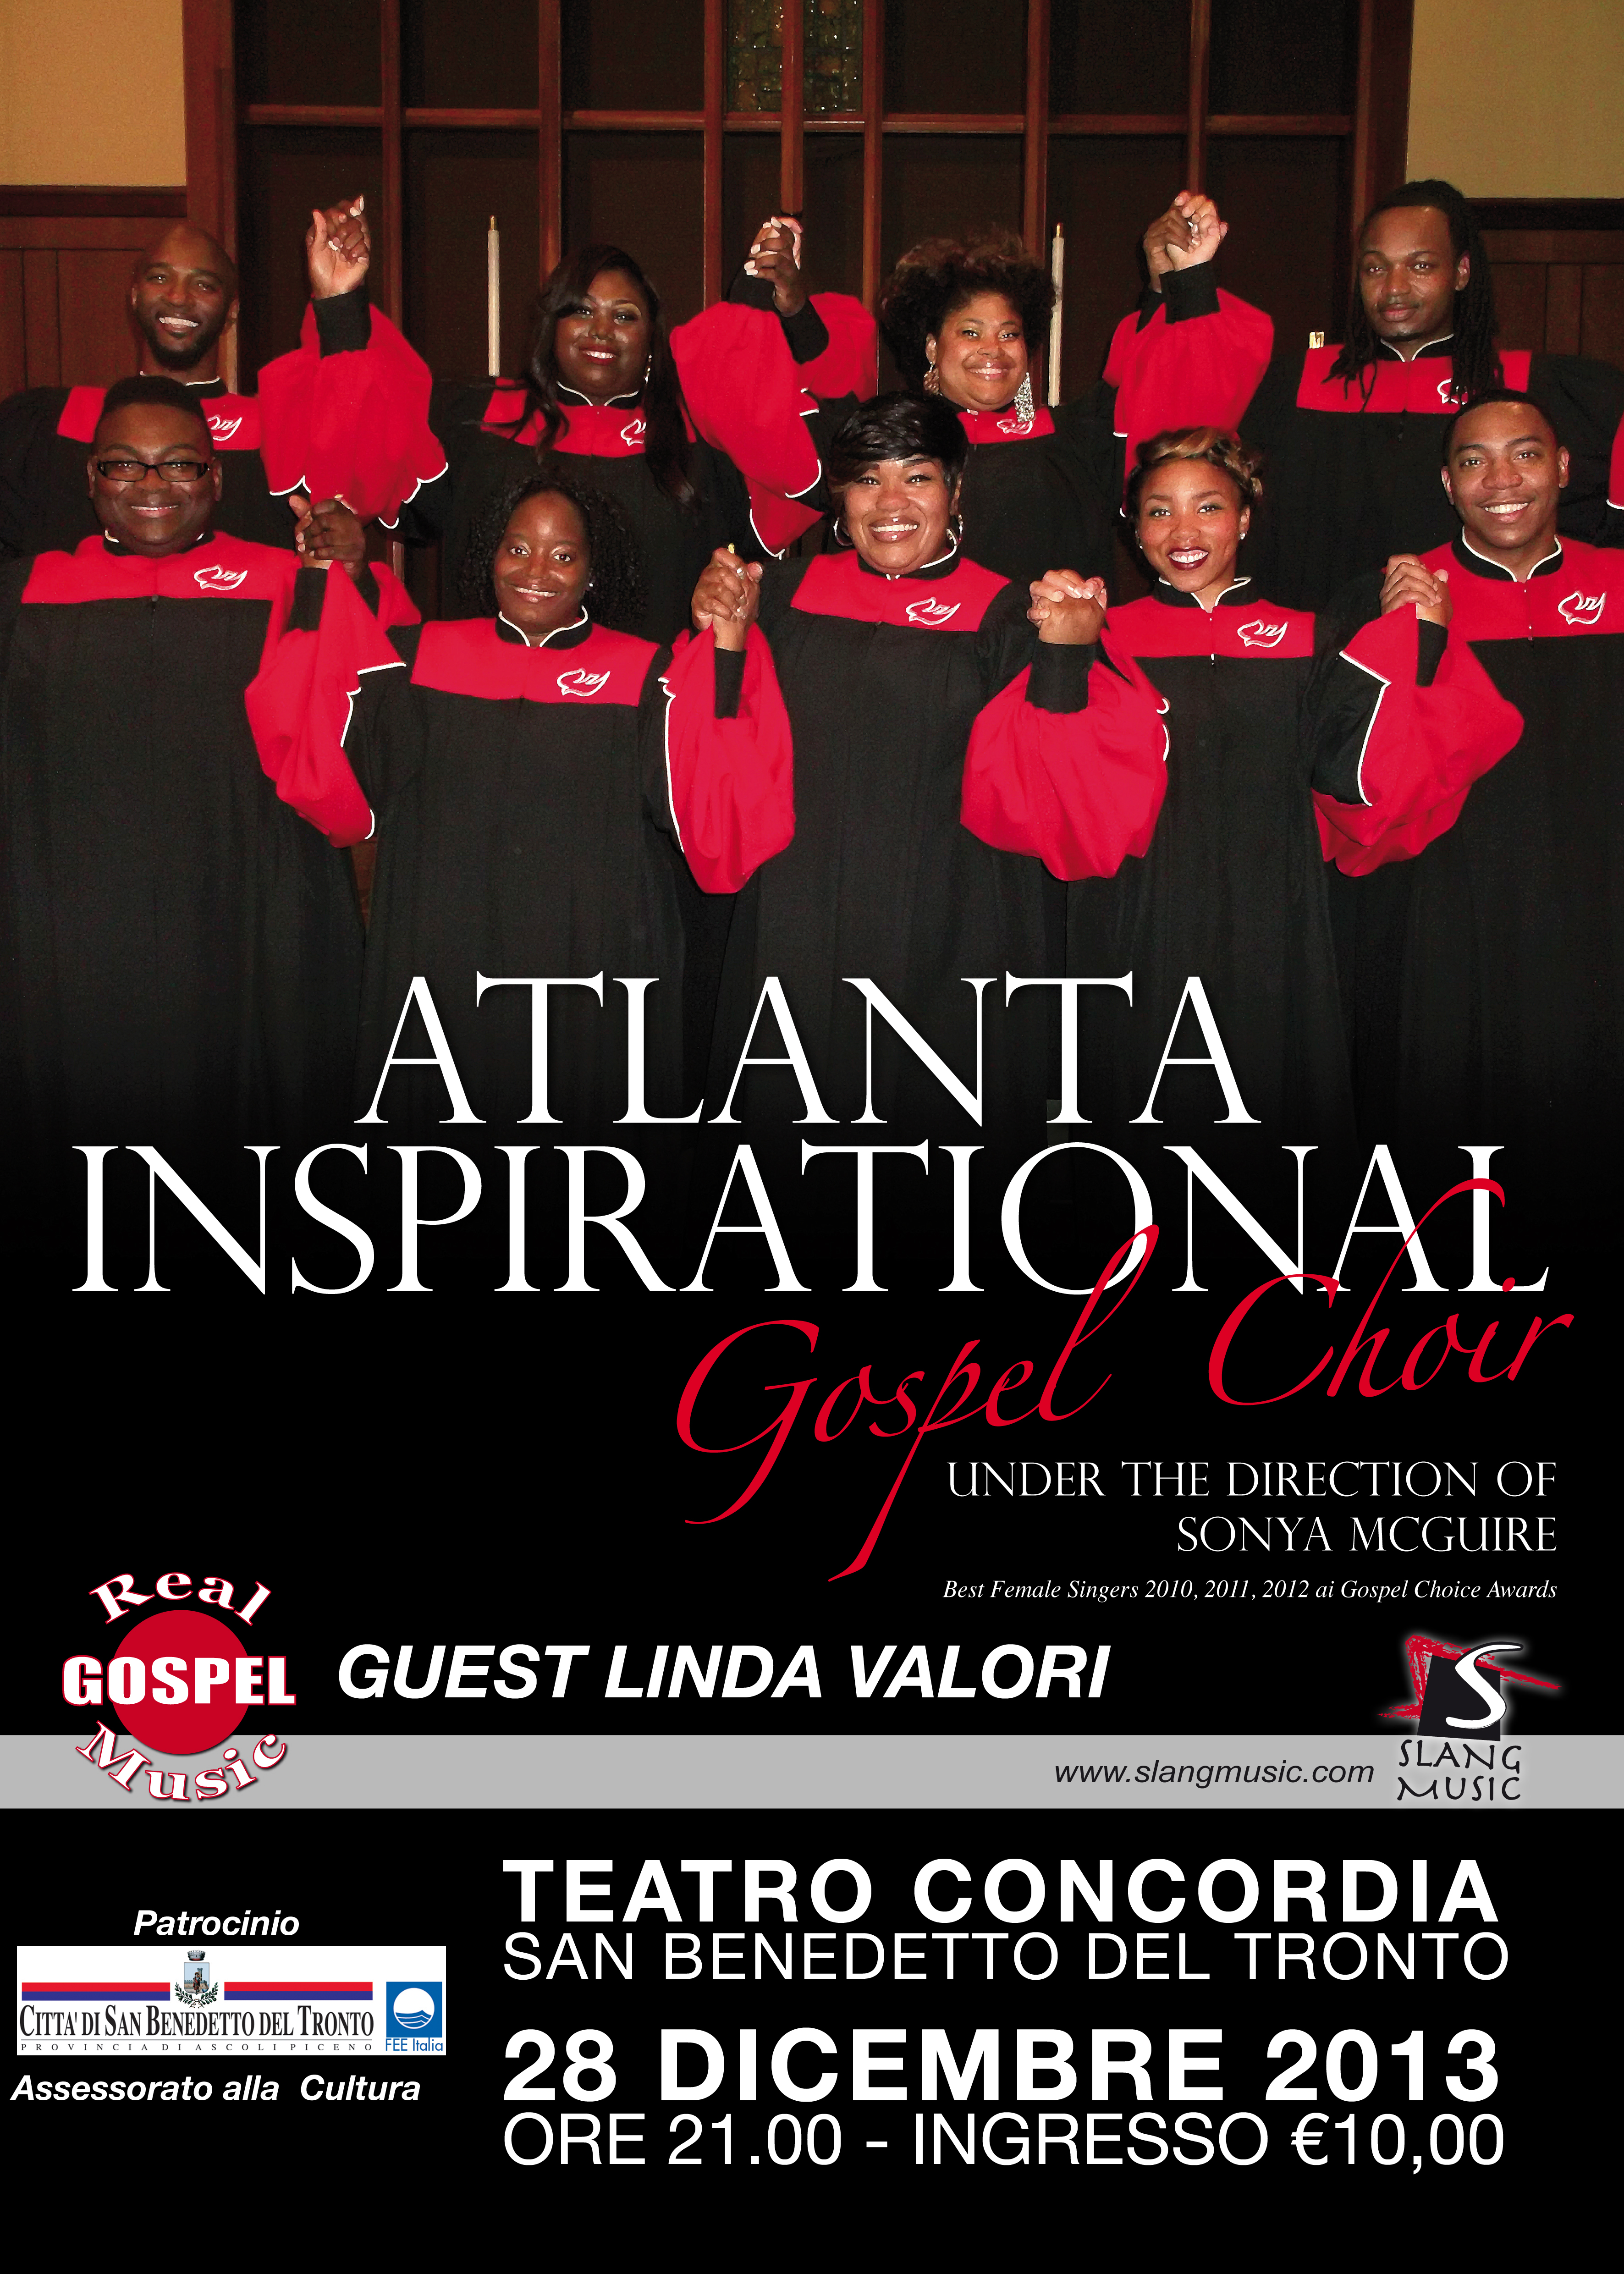 The Atlanta Inspirational Gospel Choir